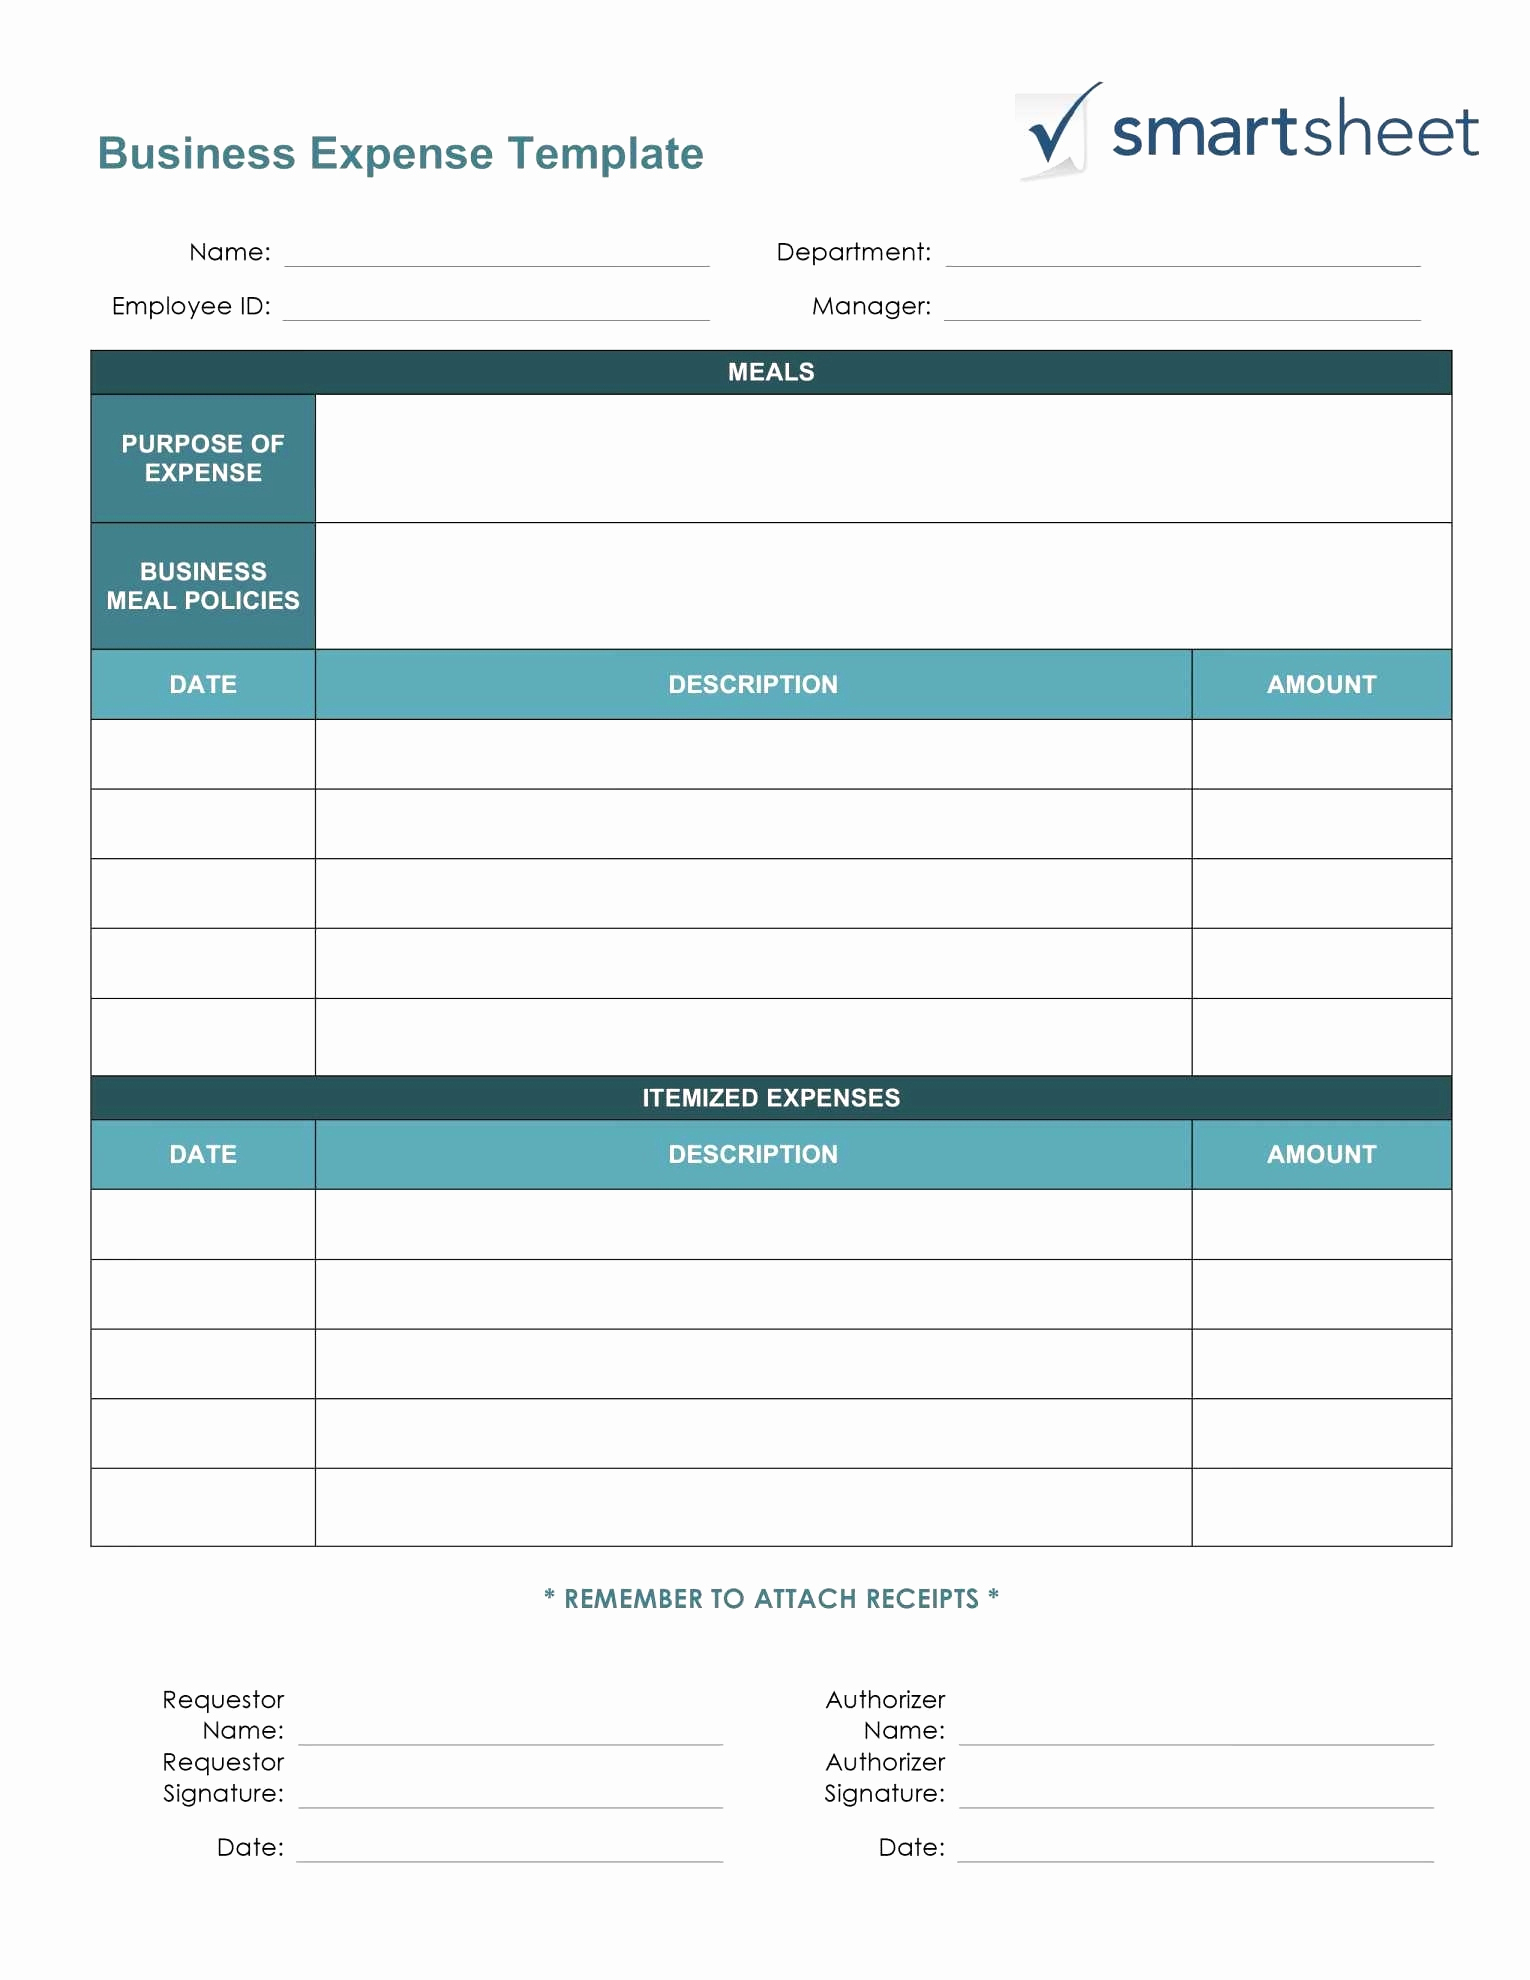 Receipt Spreadsheet Template In Spreadsheet For Taxes Expense Sheet Receipt Mileage Business